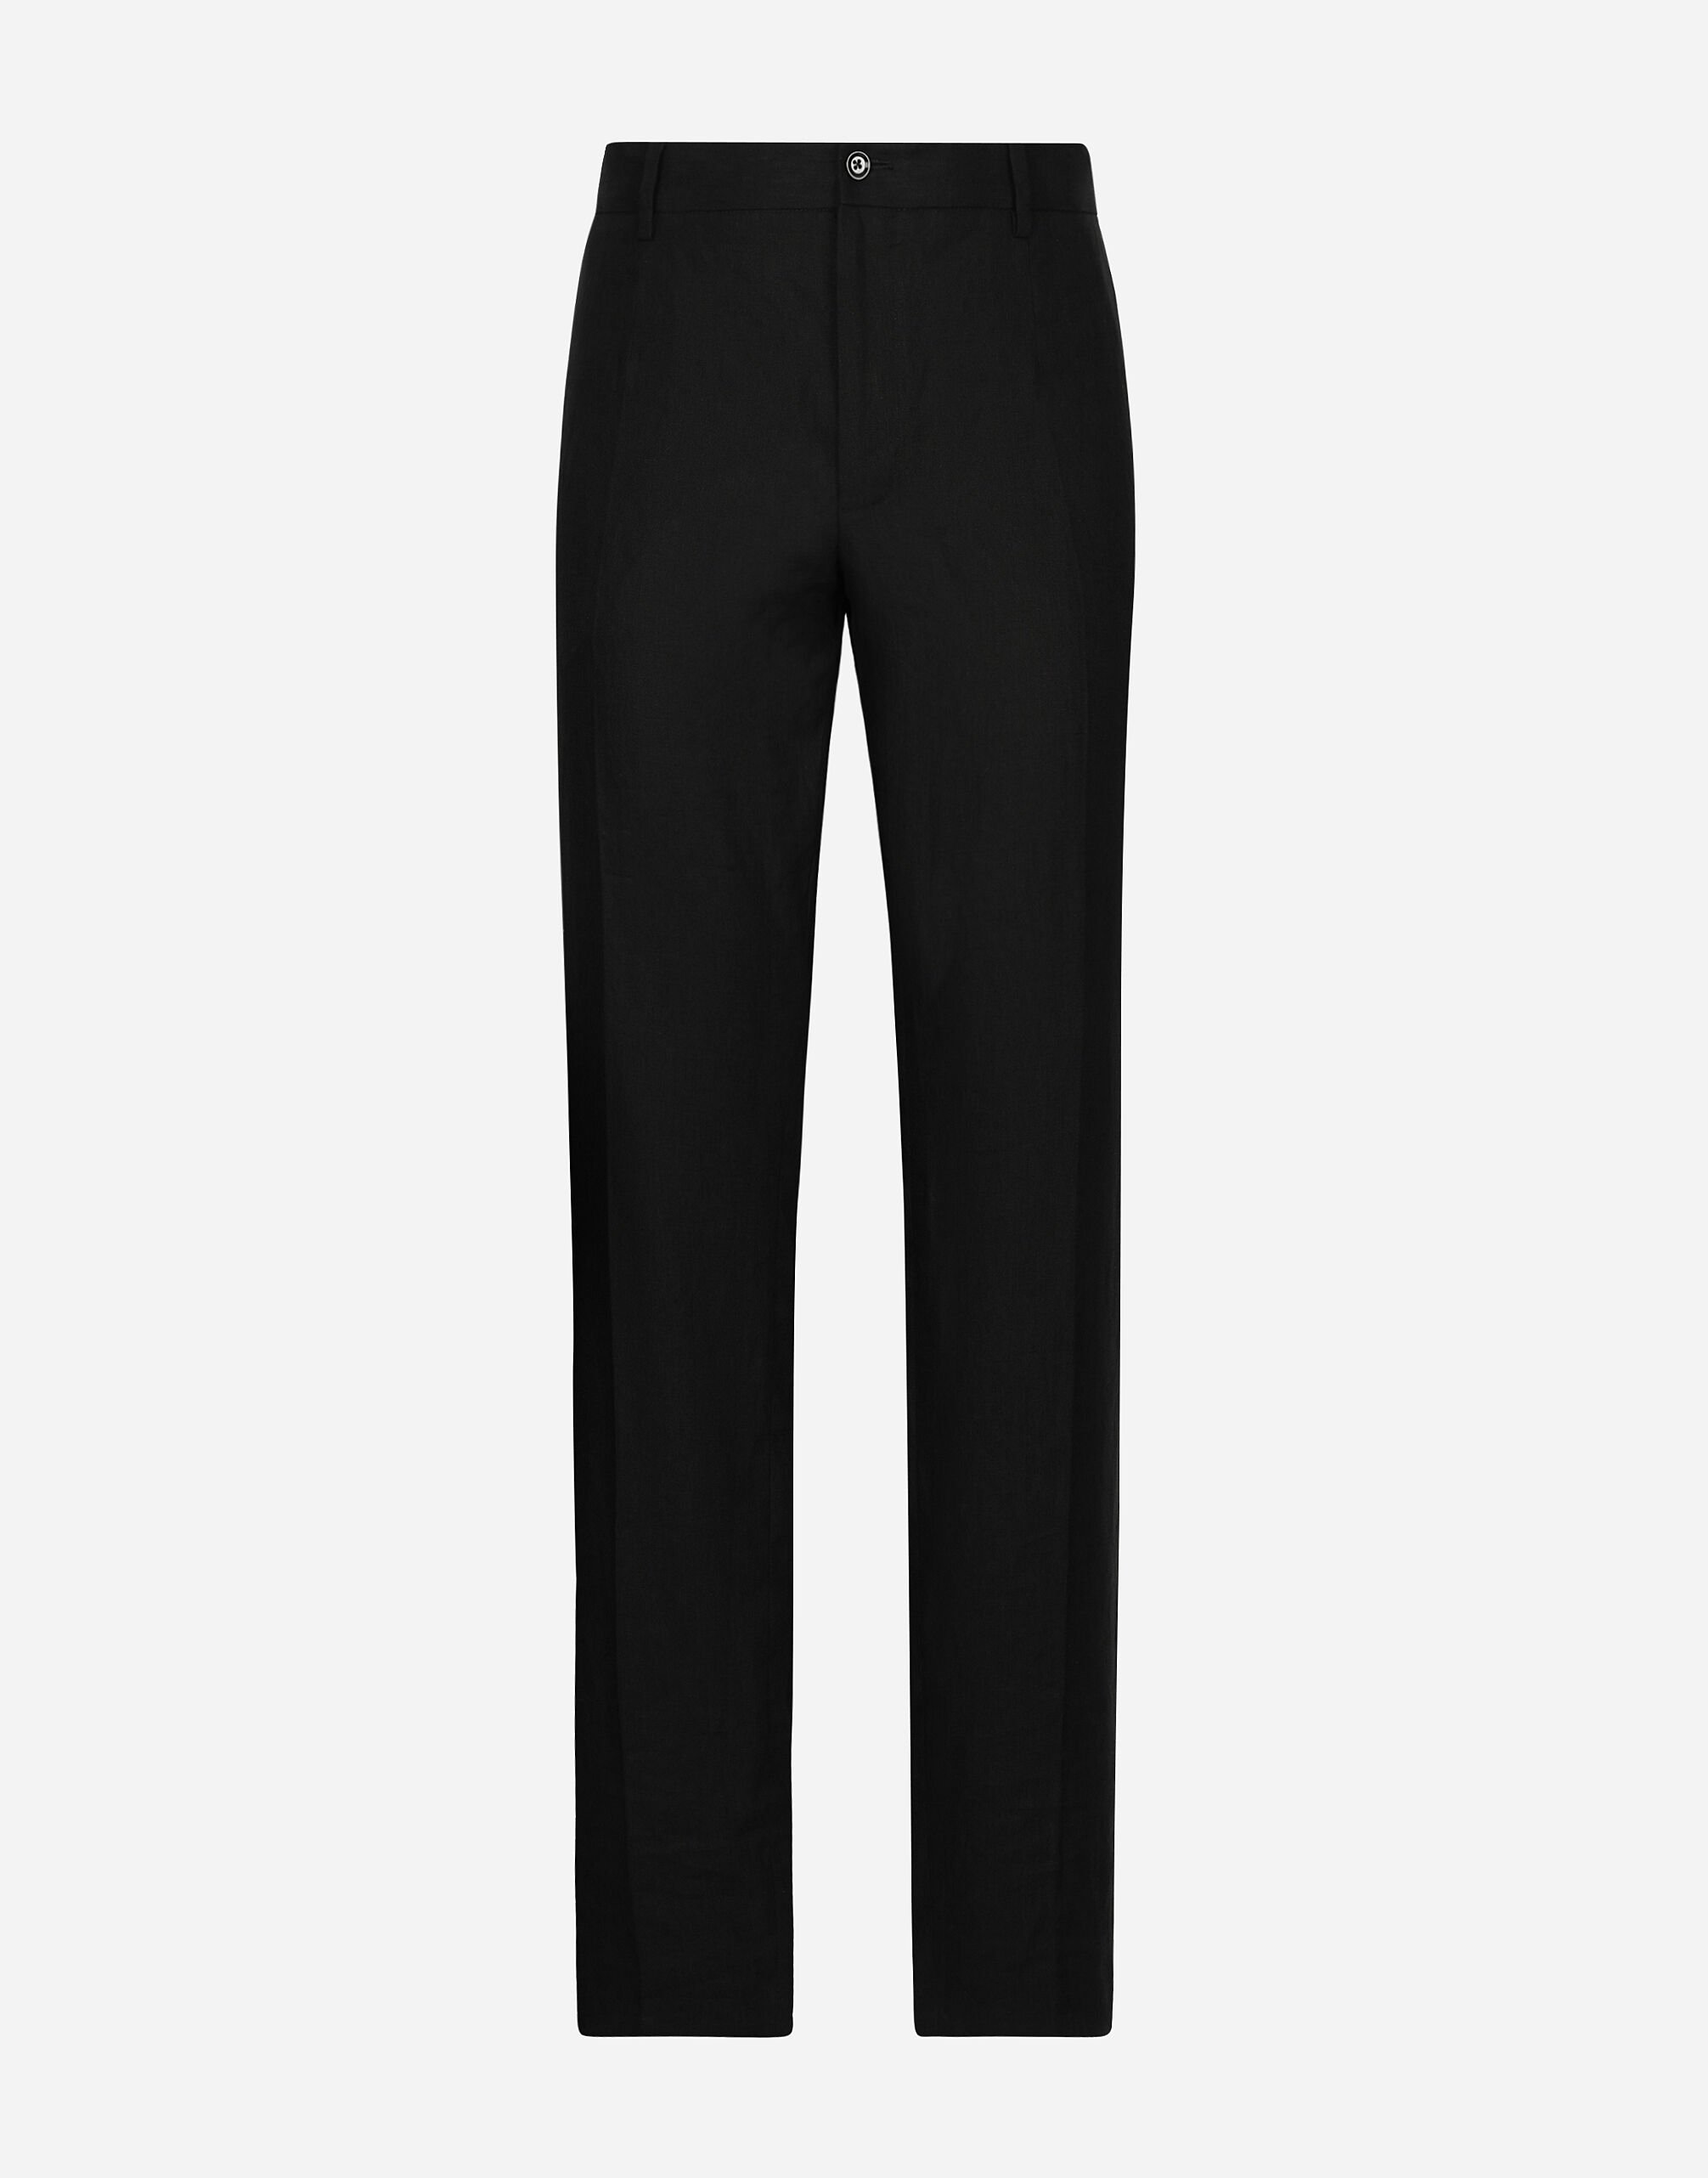 Dolce & Gabbana Tailored linen pants Black GP03JTGH253